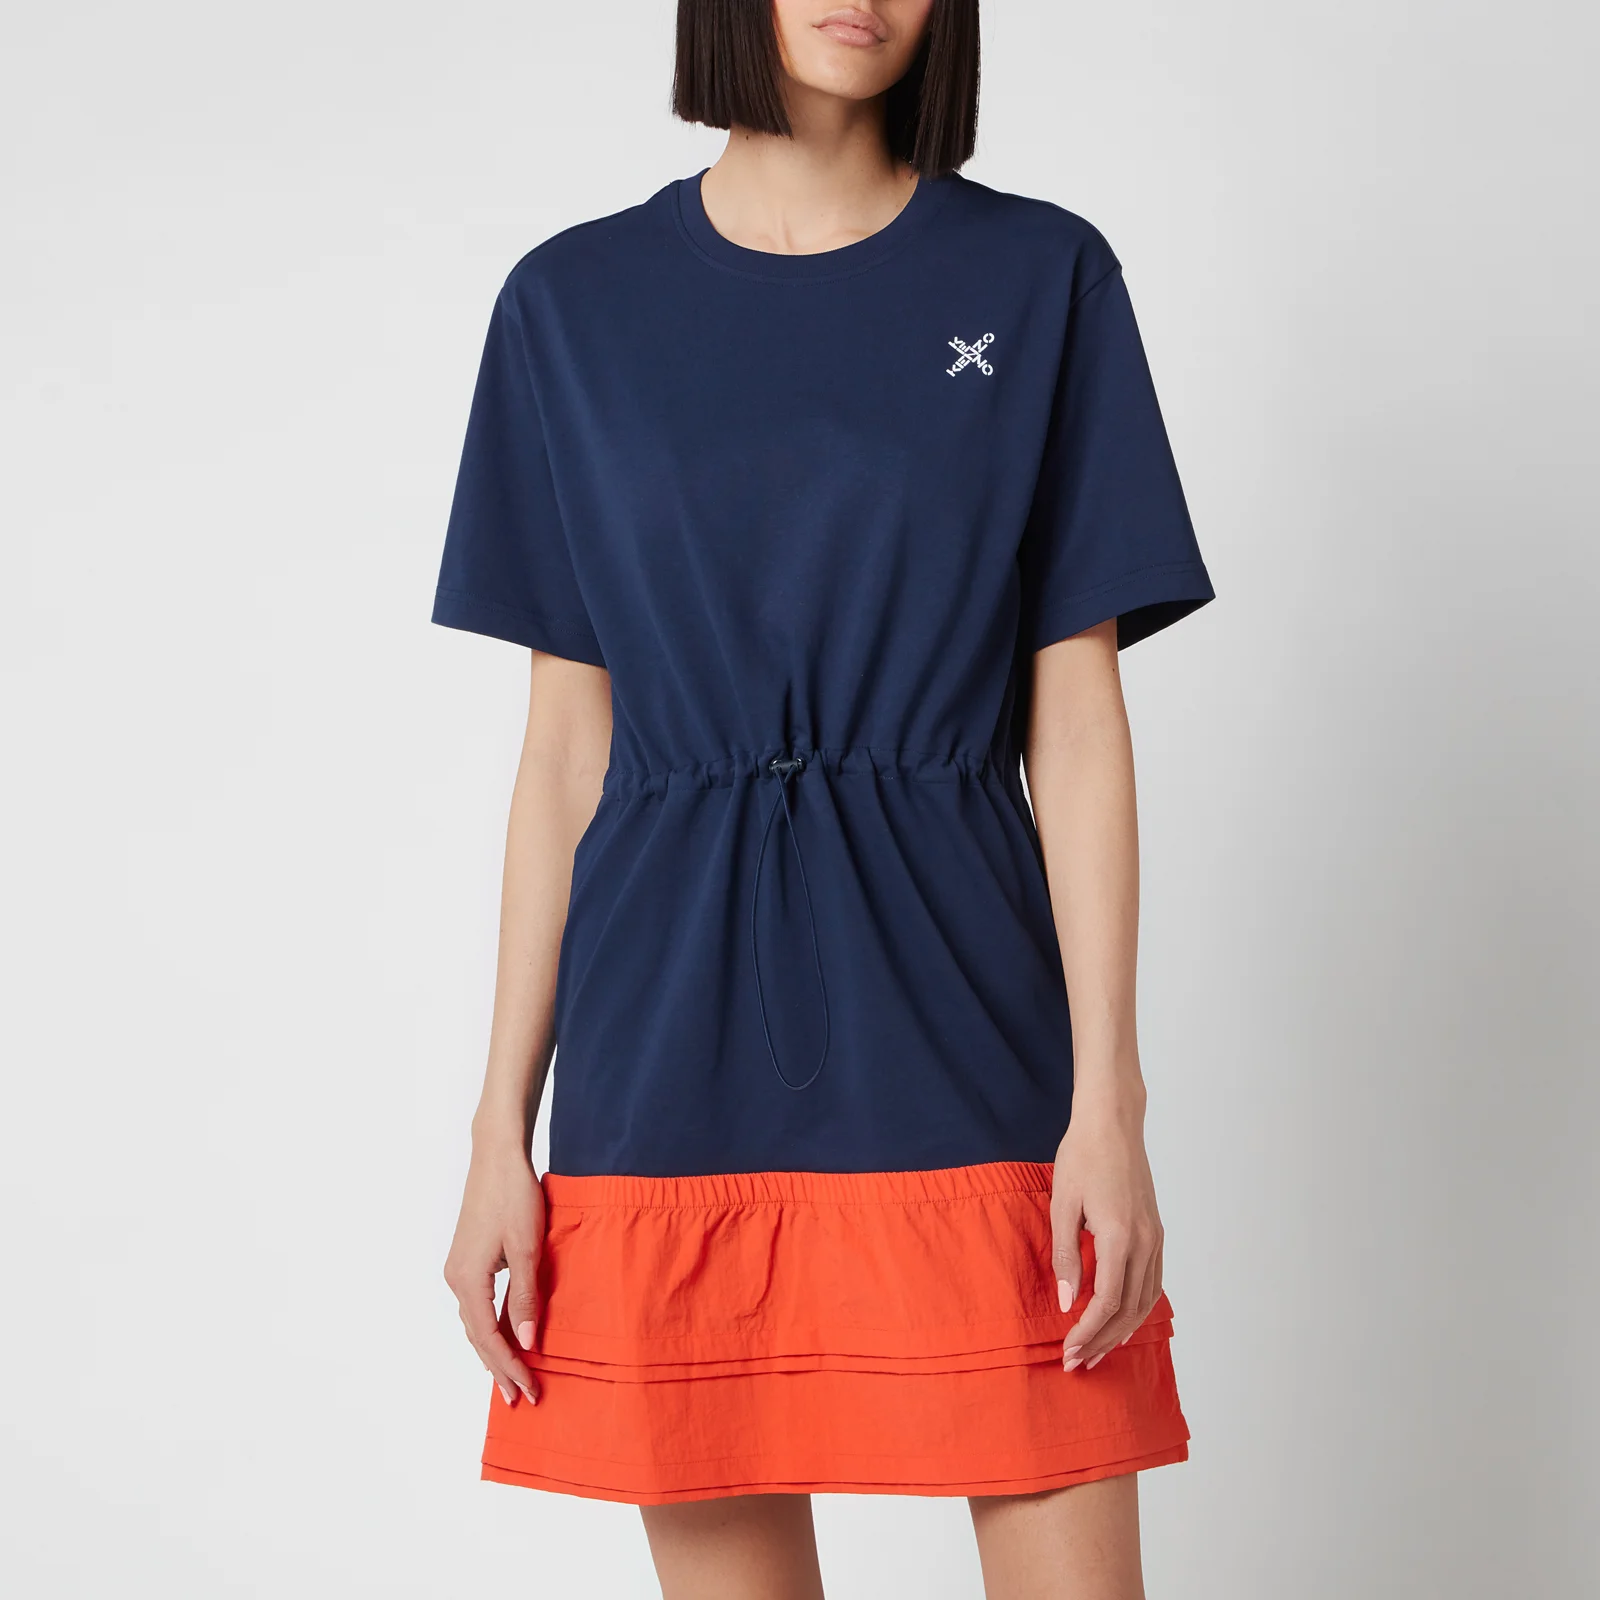 KENZO Women's Flared T-Shirt Dress - Midnight Blue Image 1